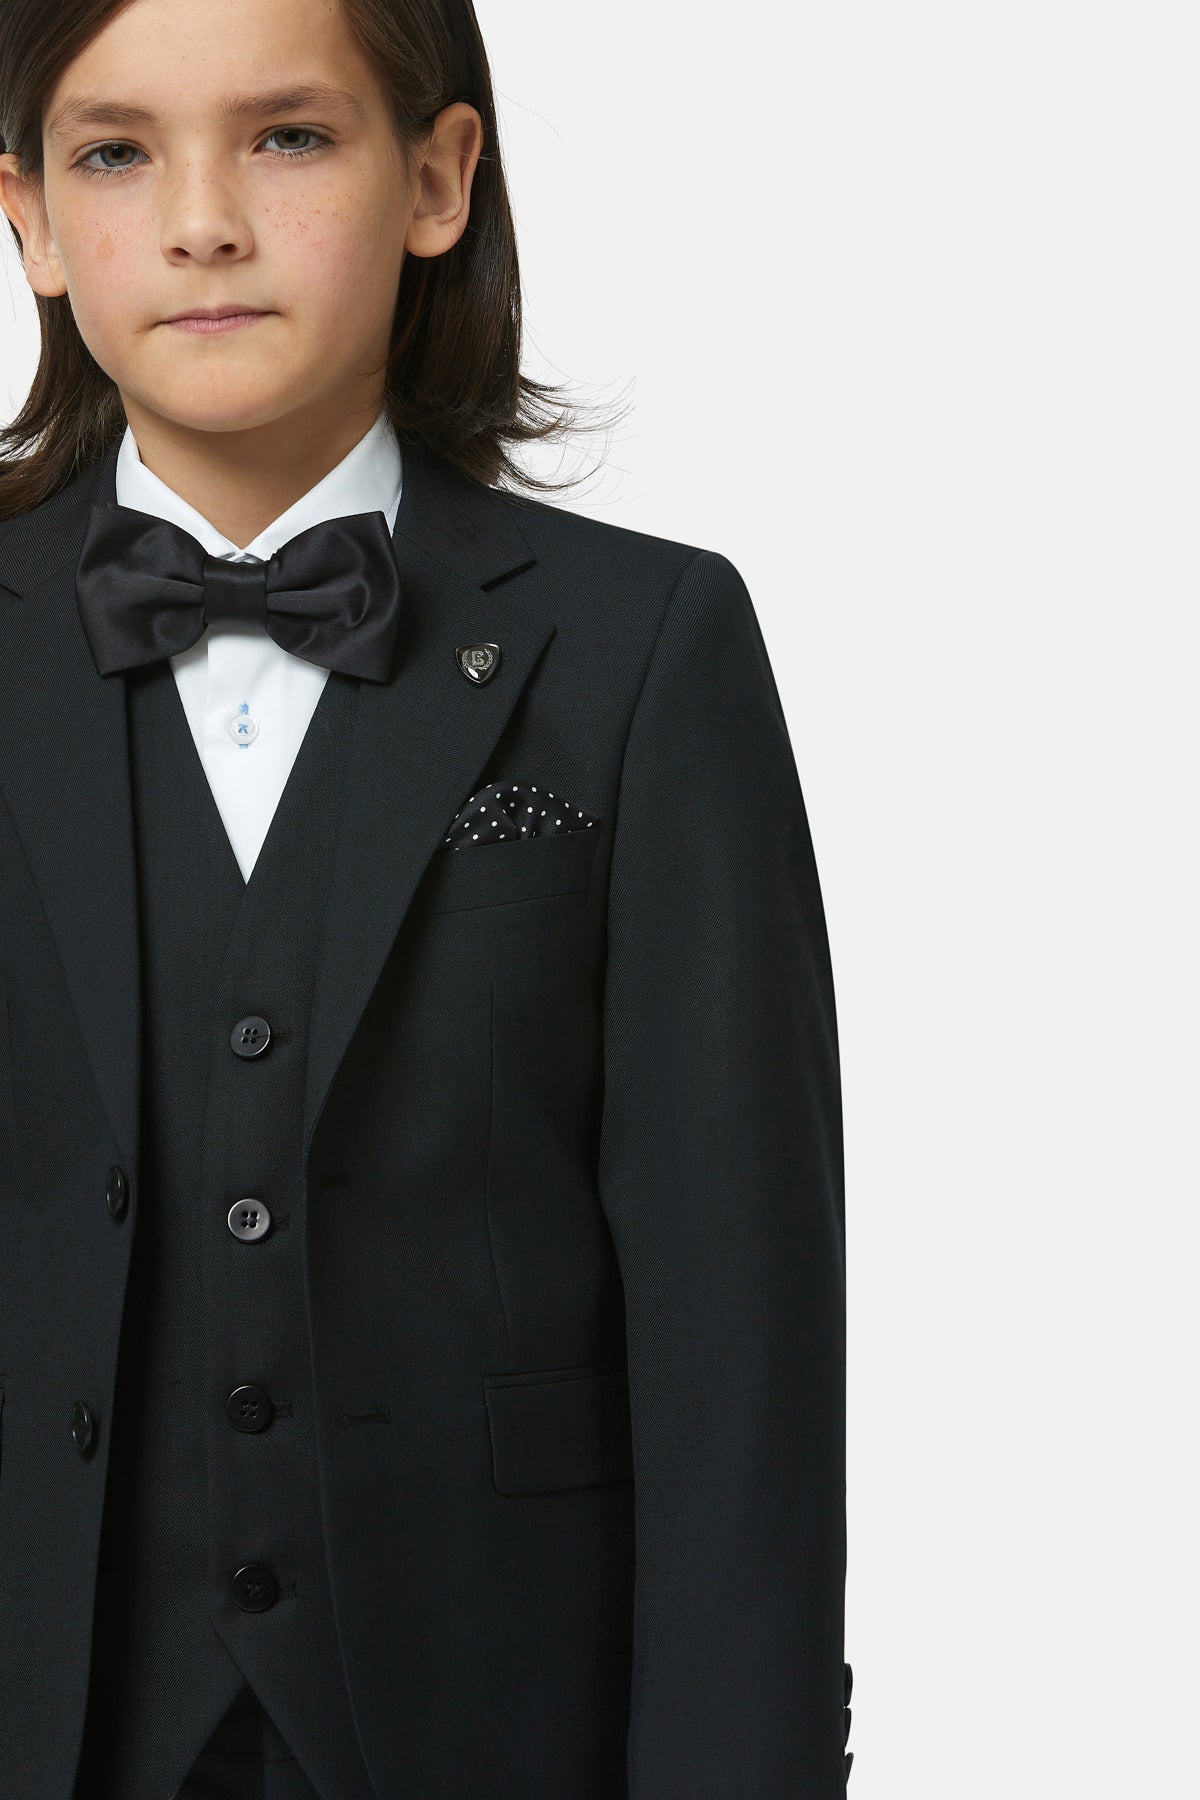 Pin by Kangkang on Stylish boys | Stylish boys, Boy styles, Suit and tie